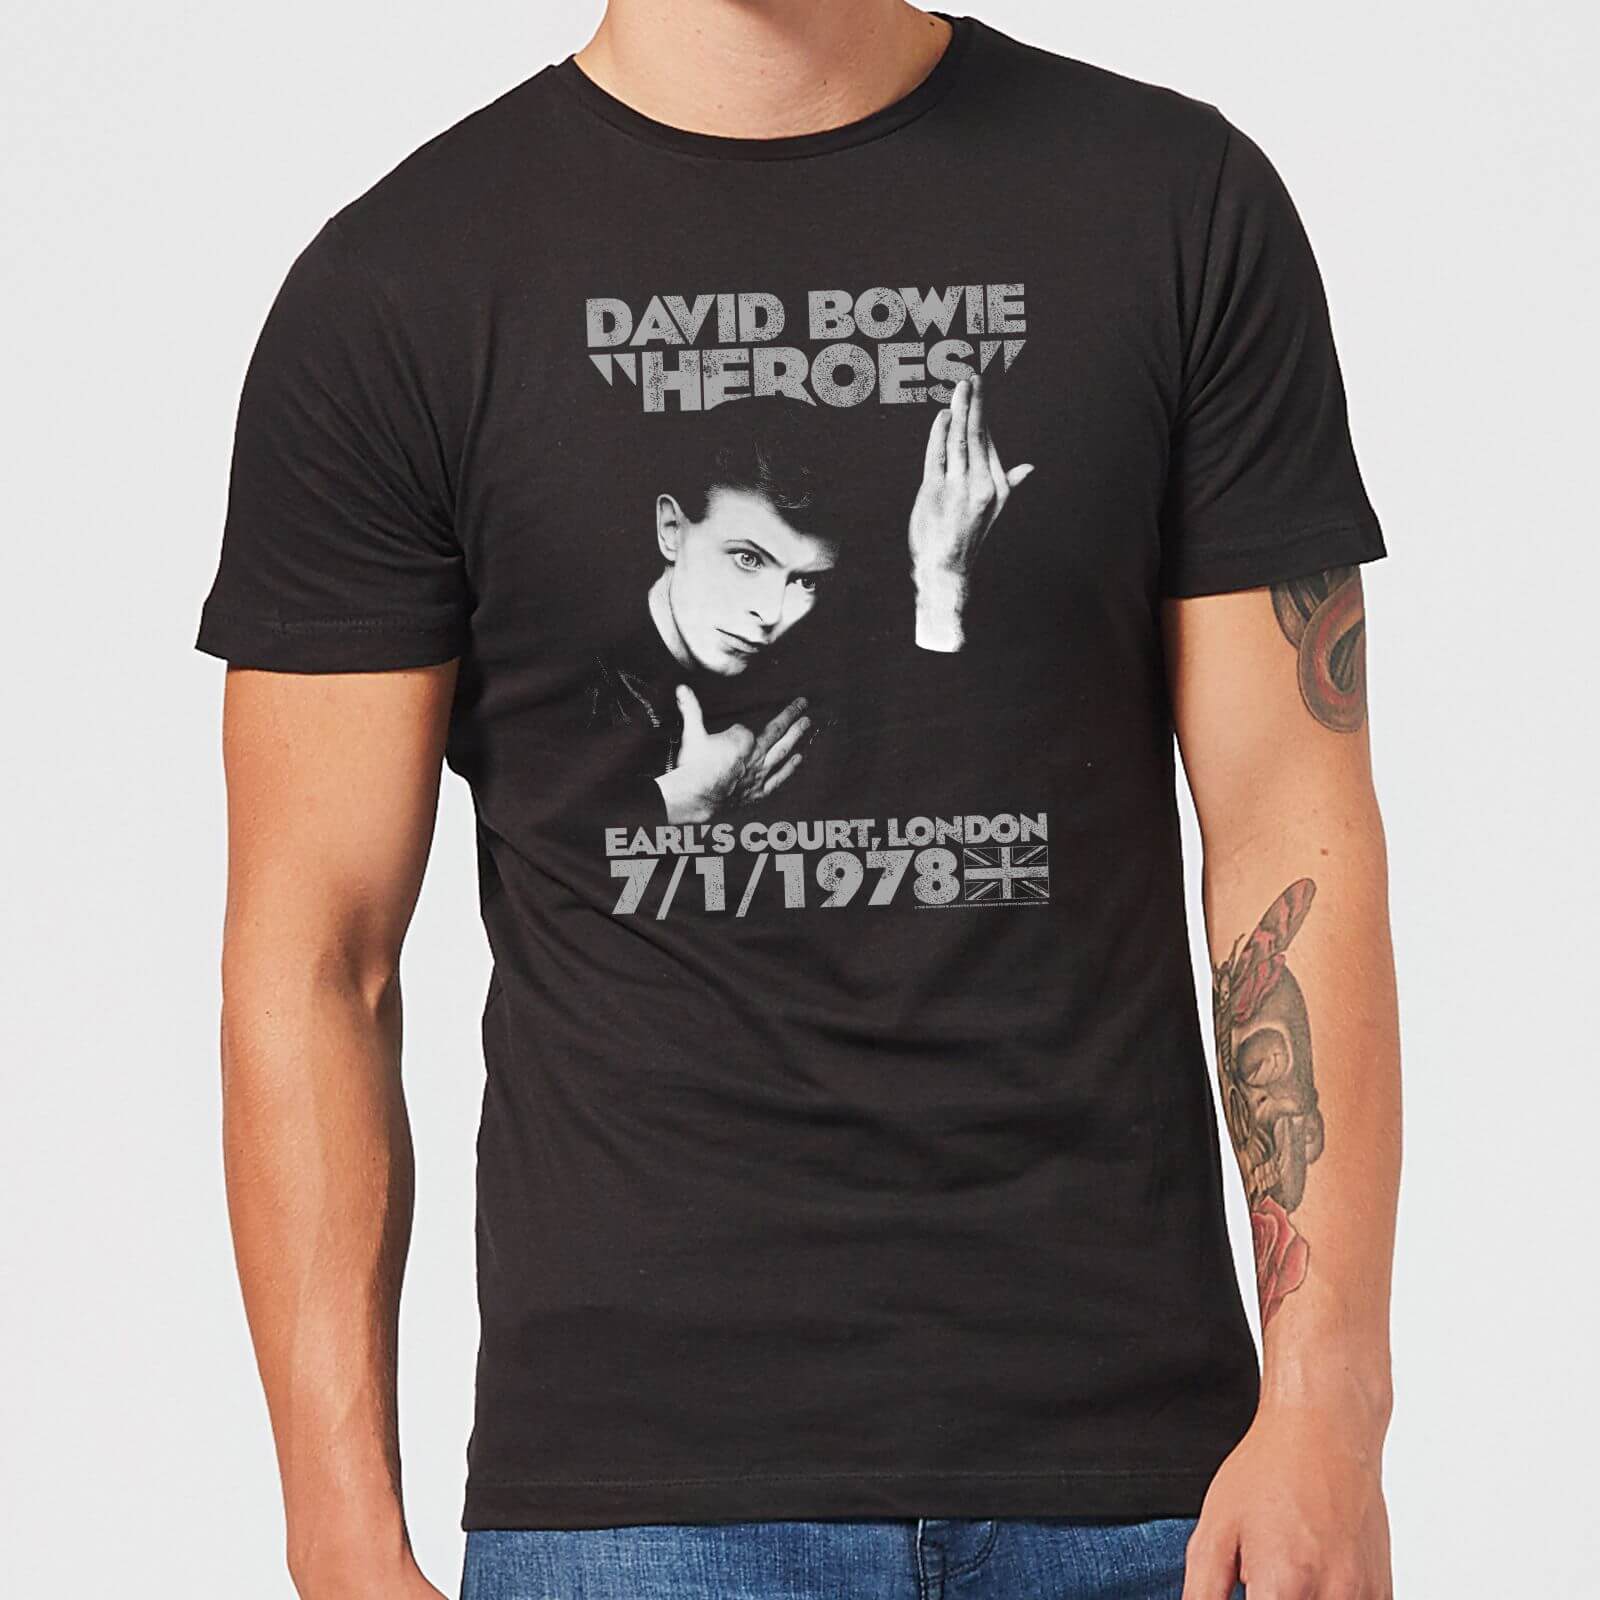 David Bowie Heroes Earls Court Men's T-Shirt - Black - S